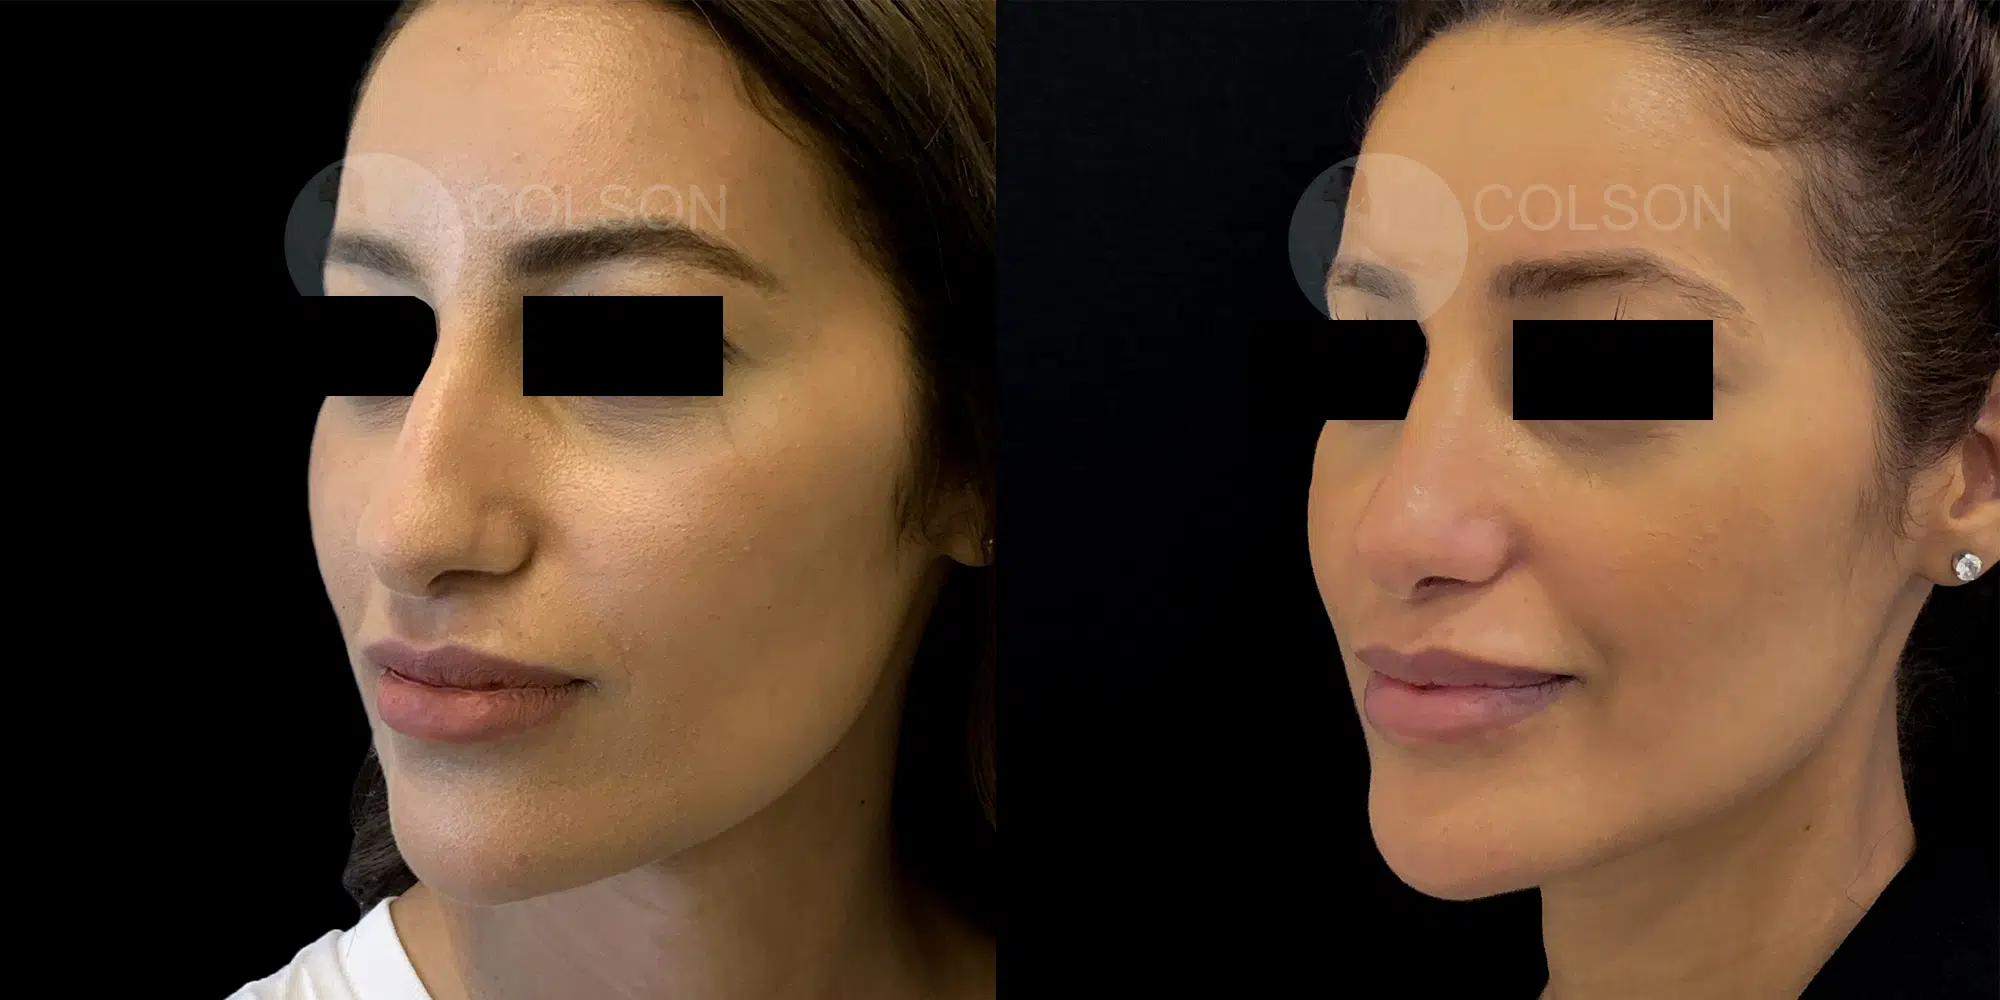 Dr Colson - Chirurgie visage - Rhinoplastie Trois Quart